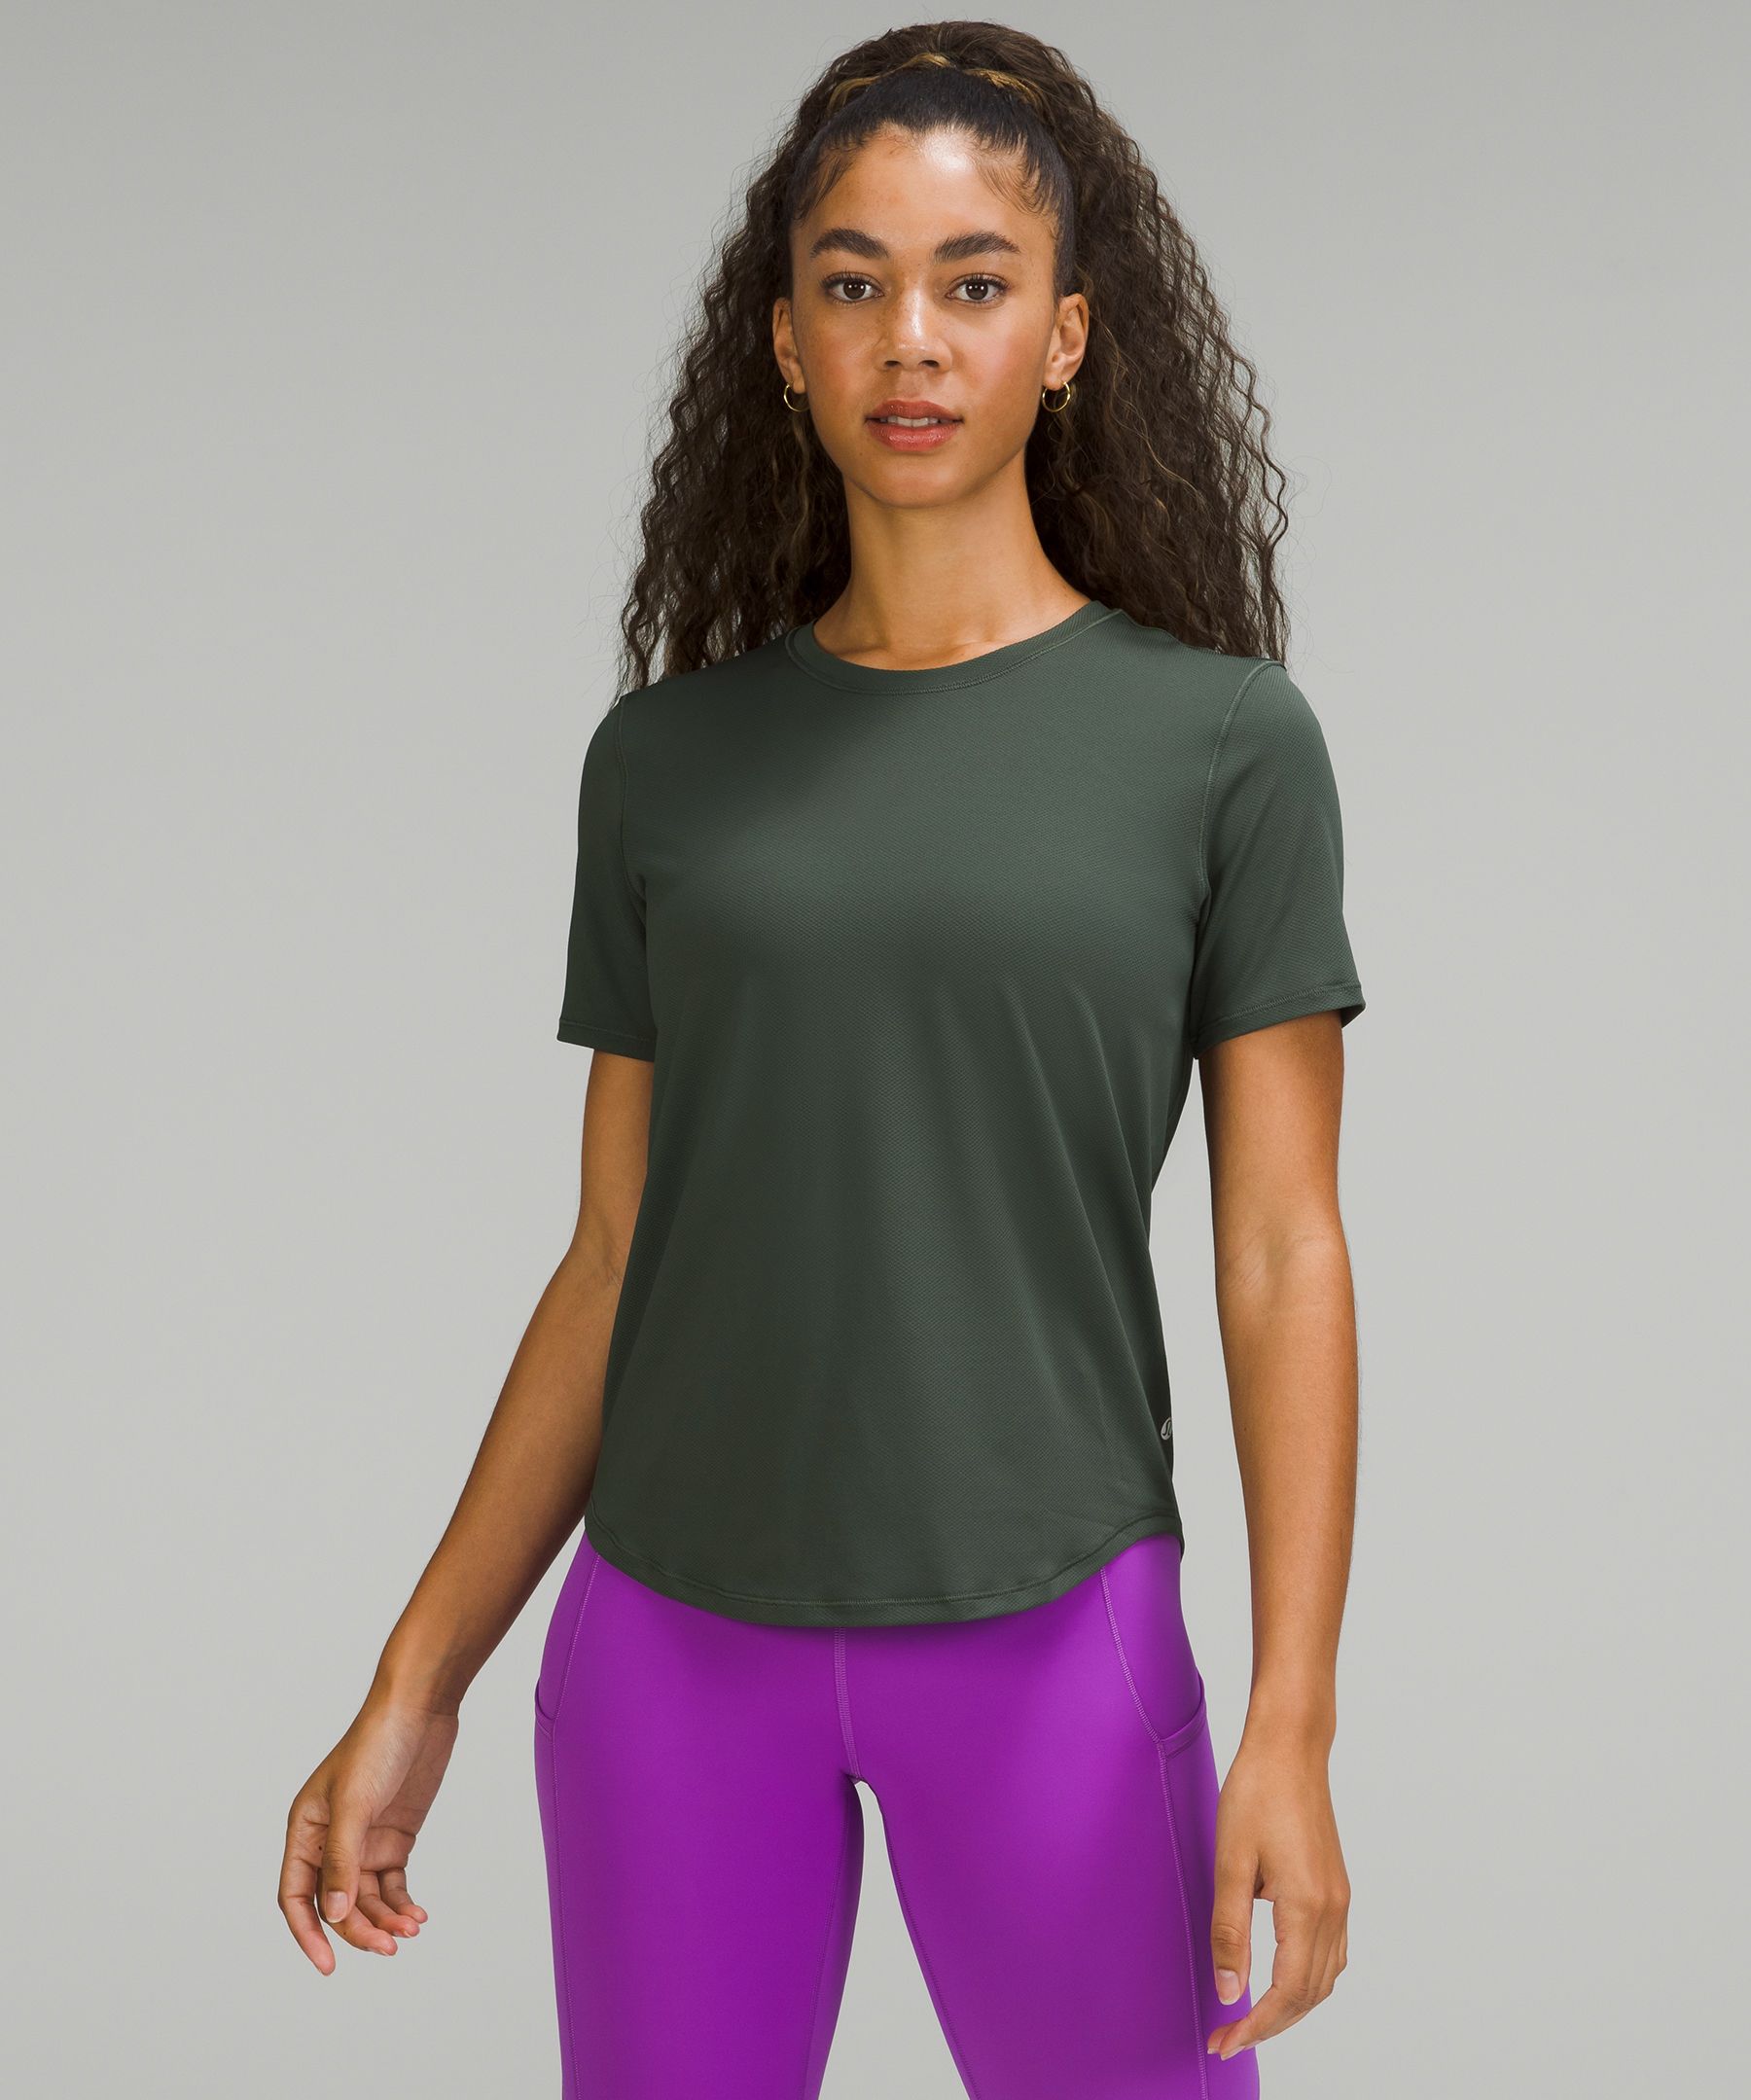 Lululemon High-neck Running And Training T-shirt In Green Twill